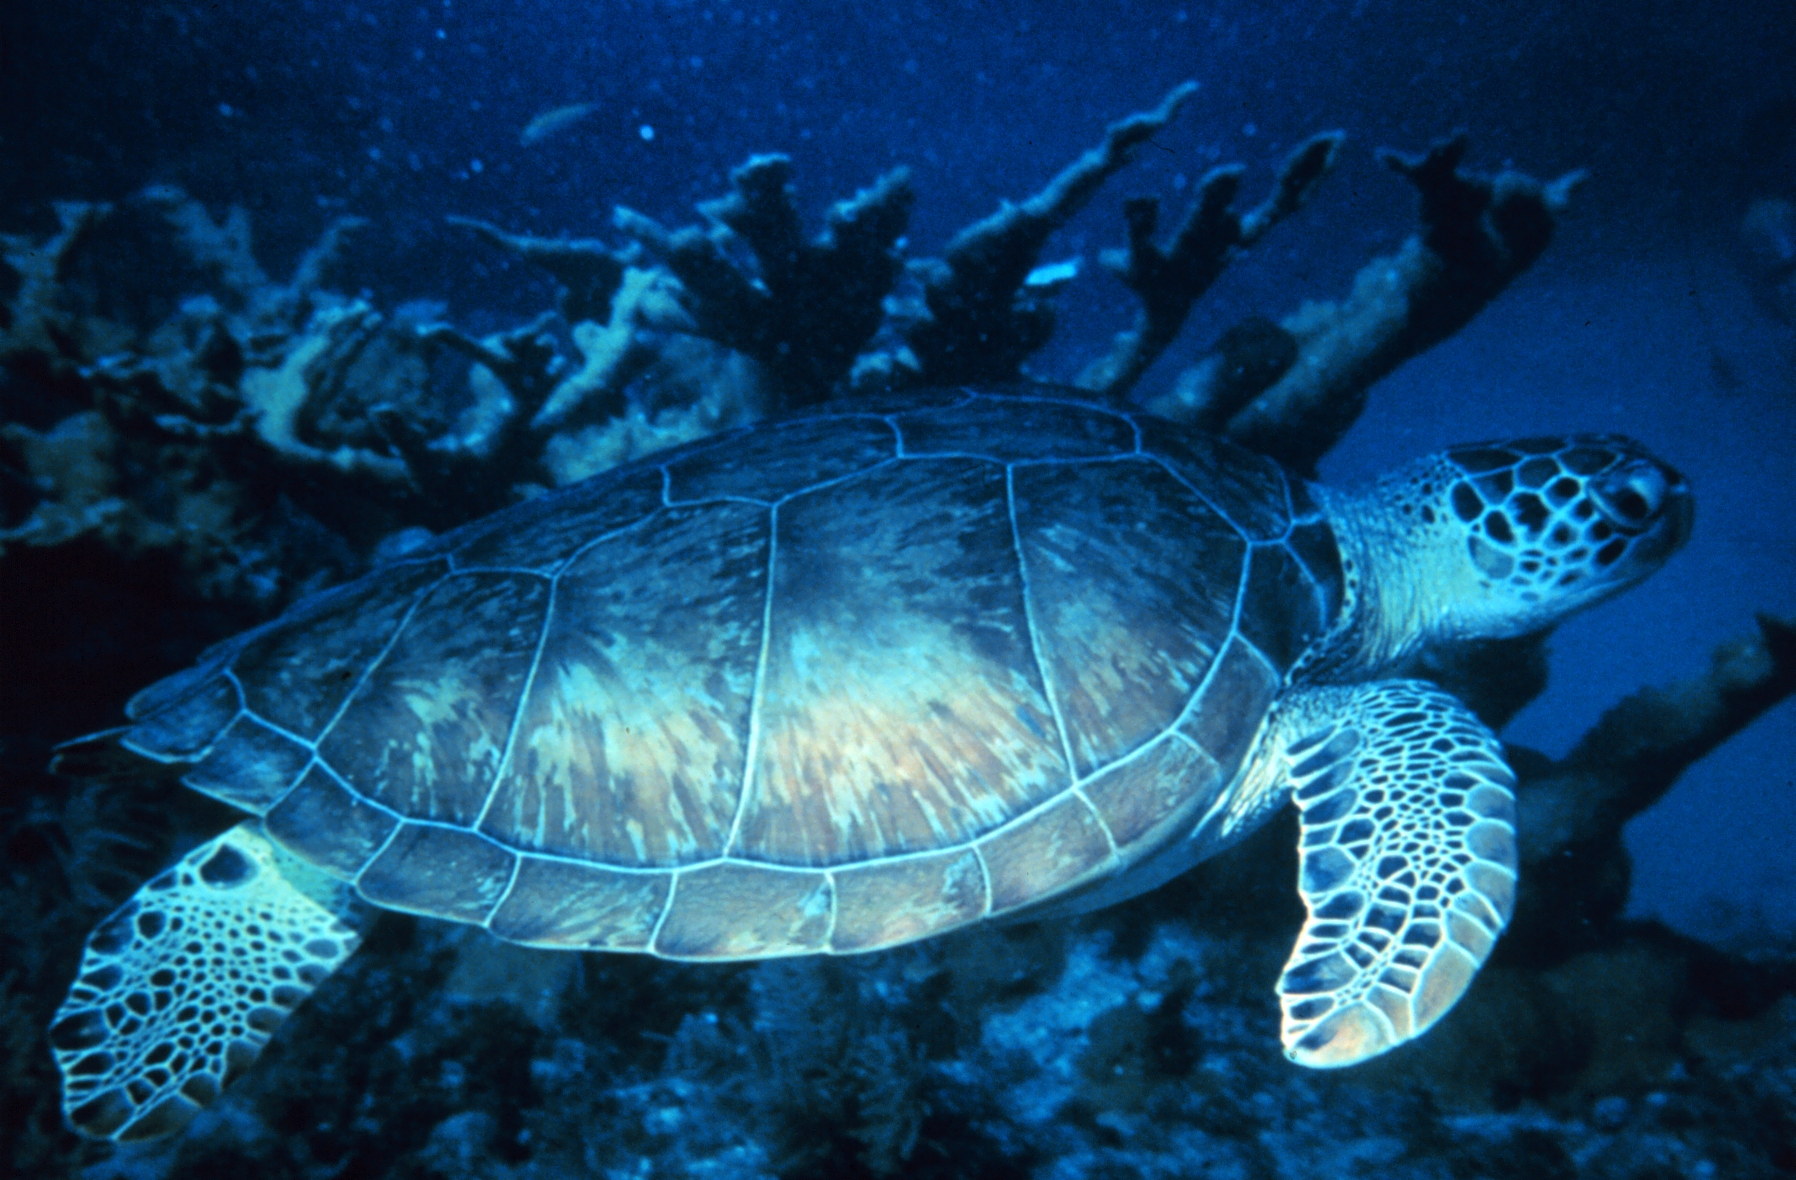 turtle resting on reef under blue light